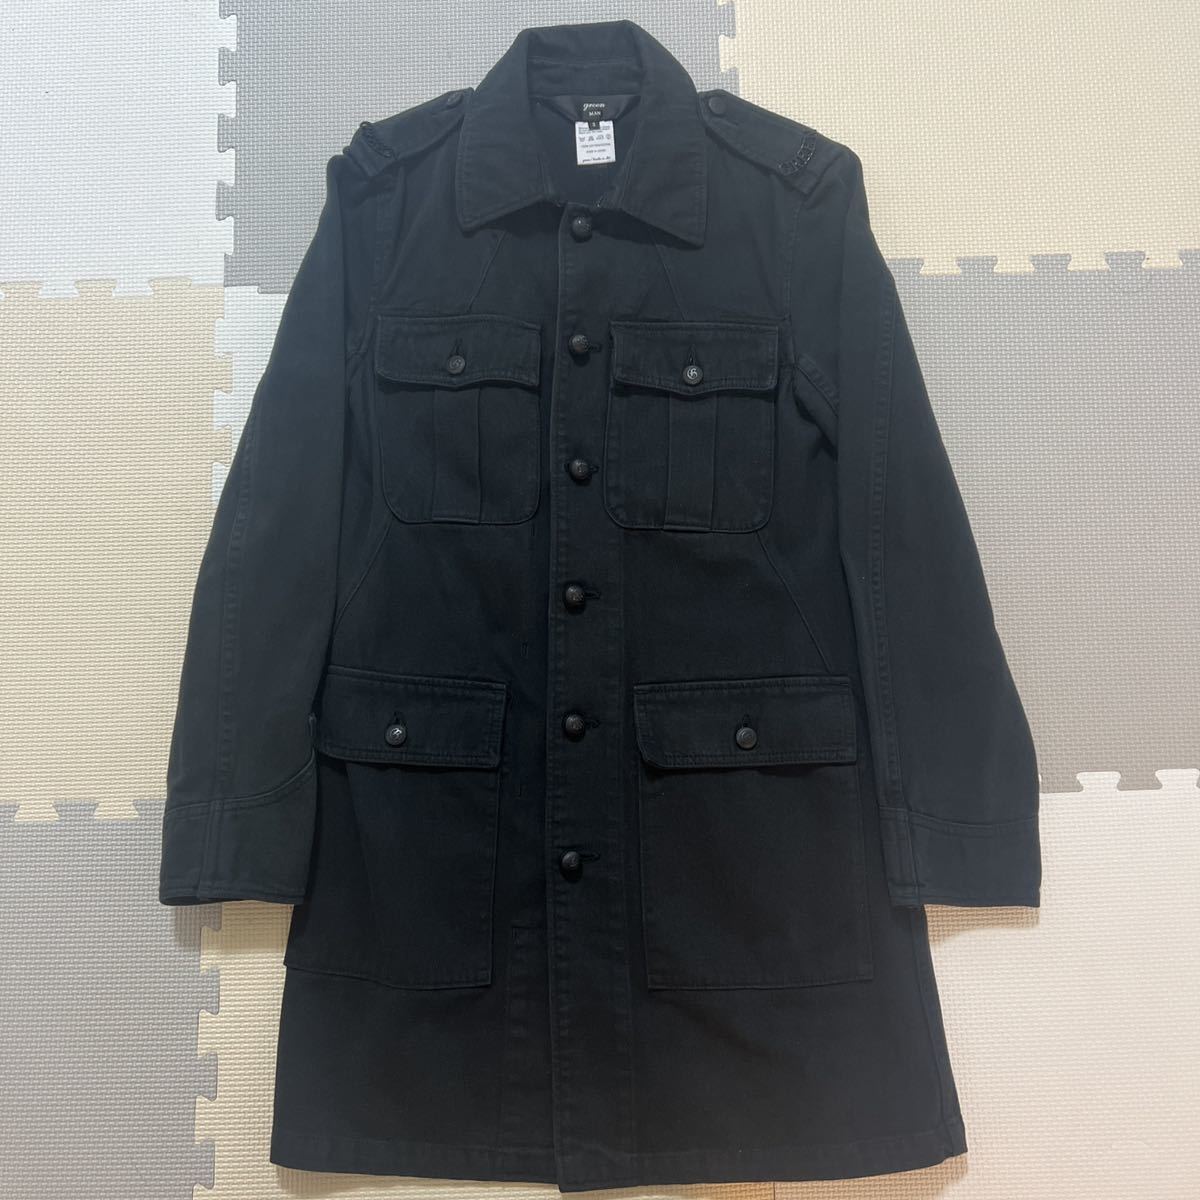 green MAN military coat size 2 black green man HYKE high km-65 jacket Mod's Coat Vintage Vintage Loveless 